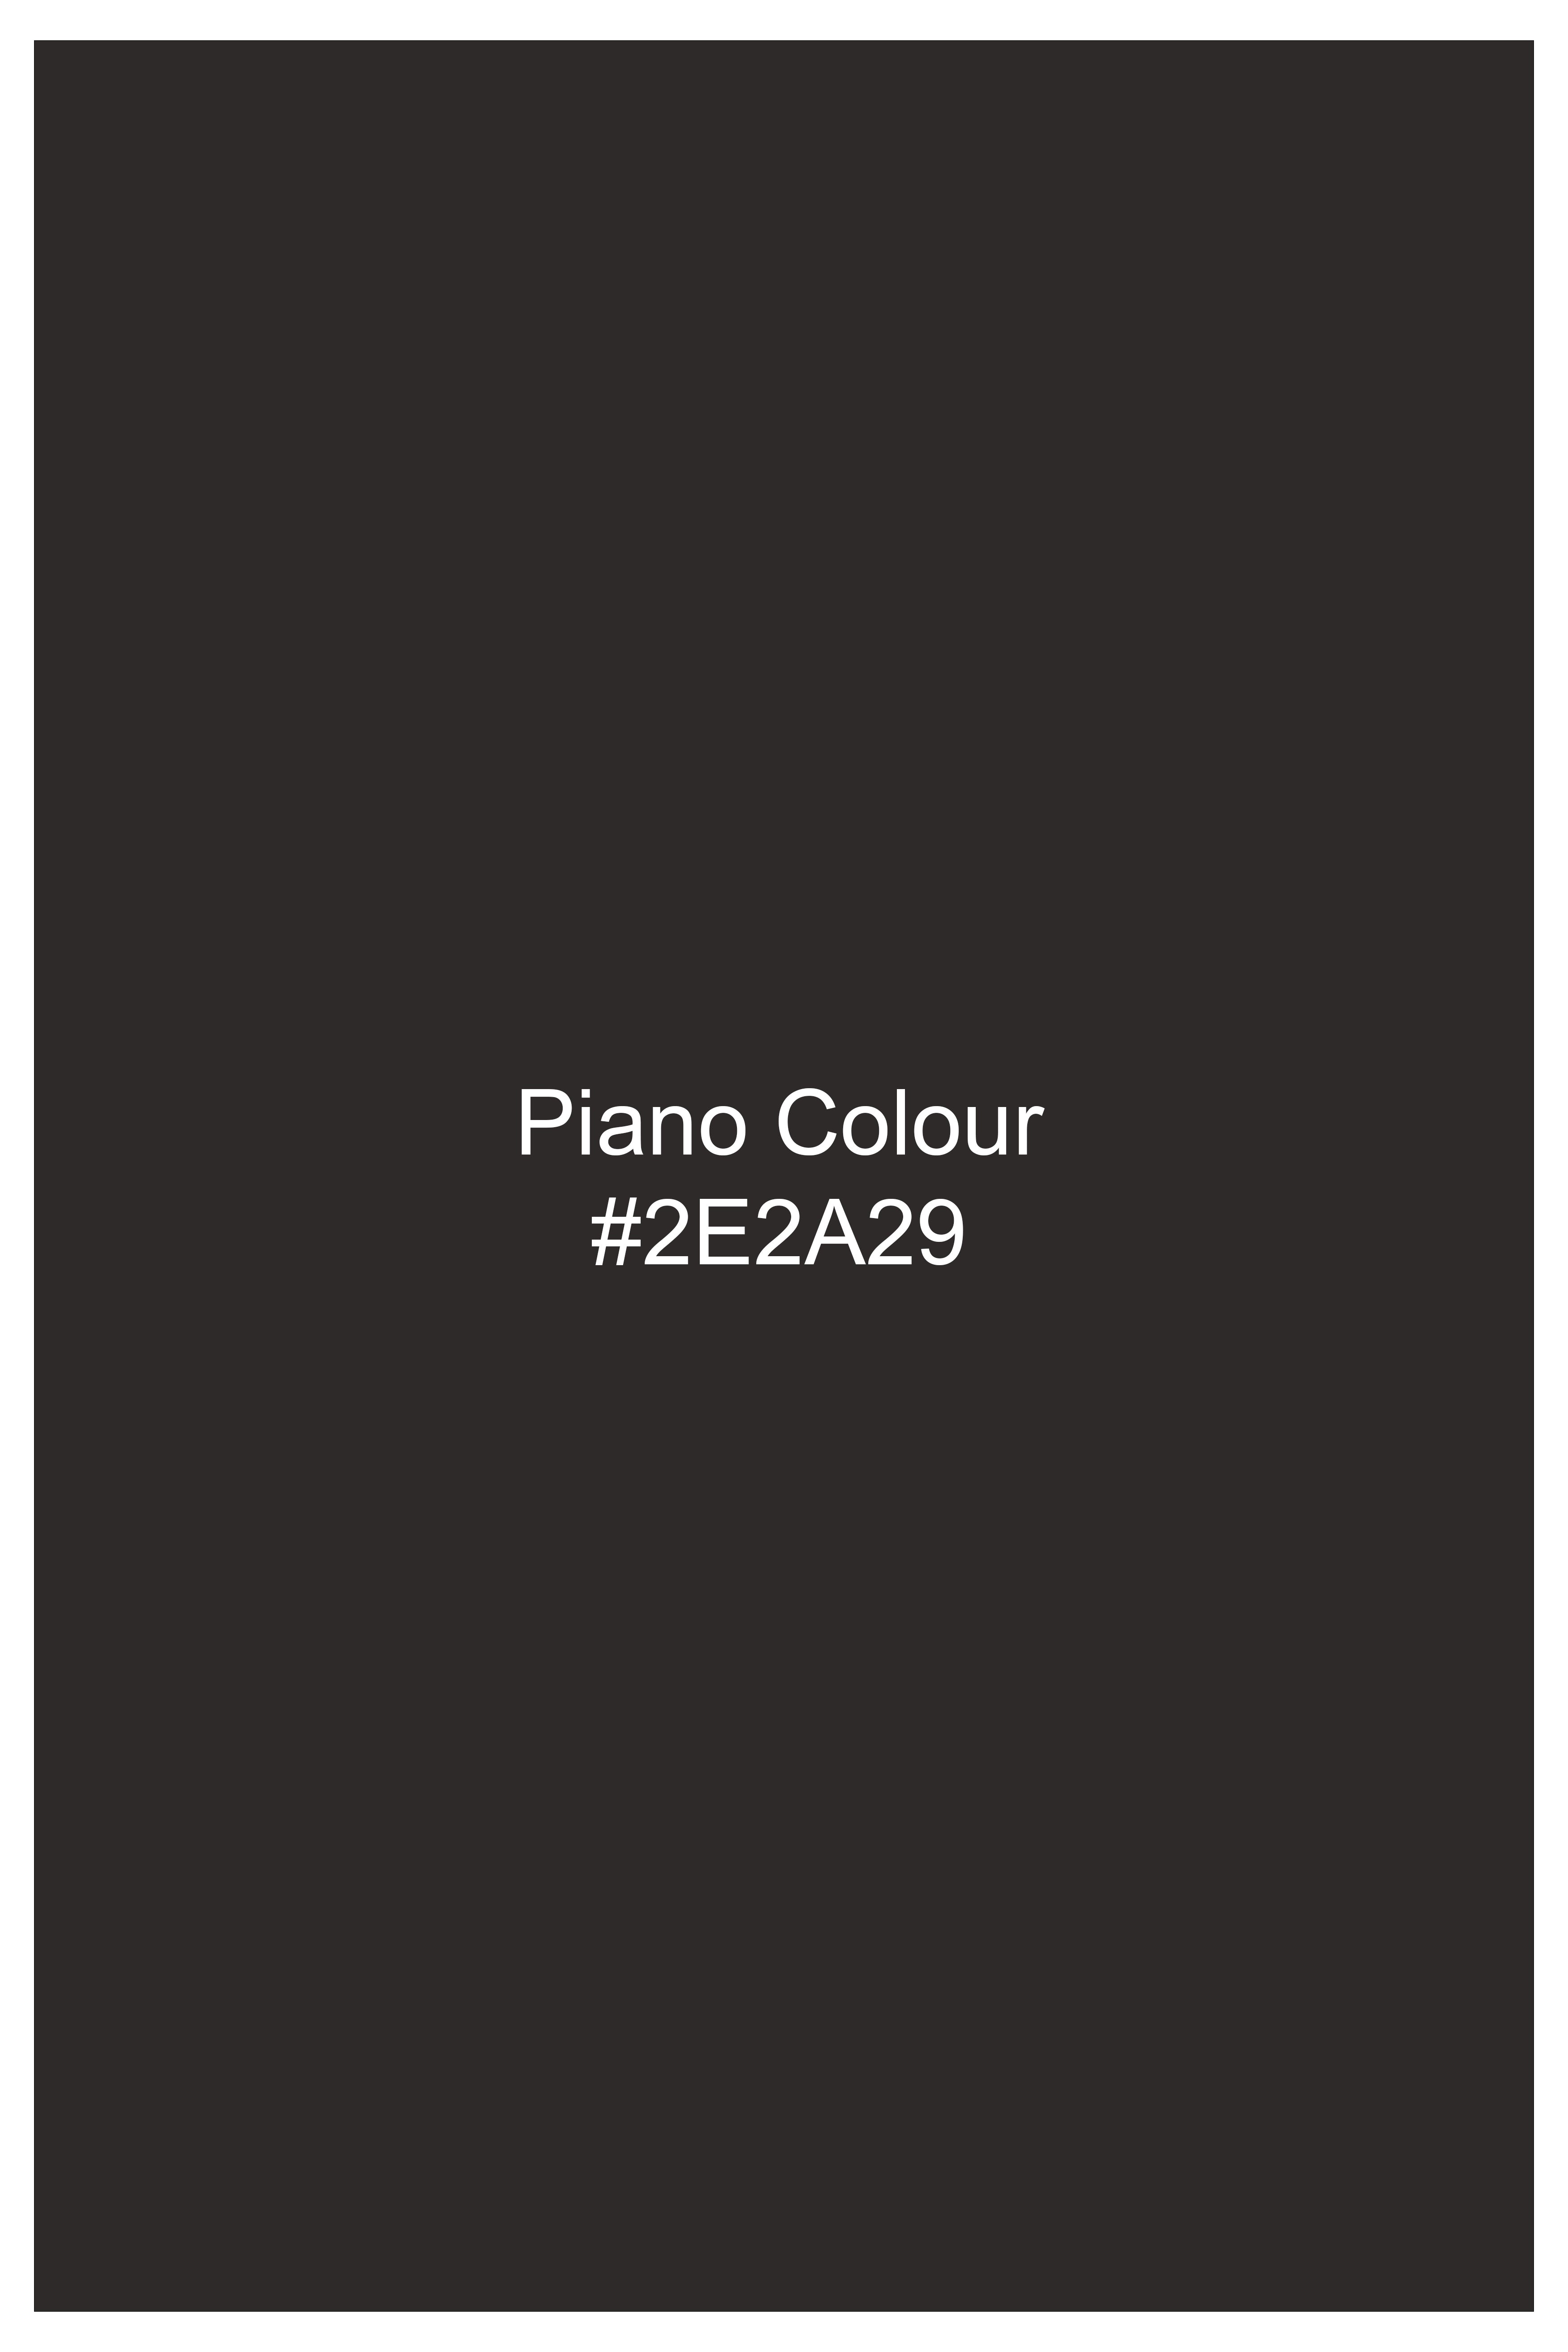 Piano Brown Plaid Tweed Waistcoat